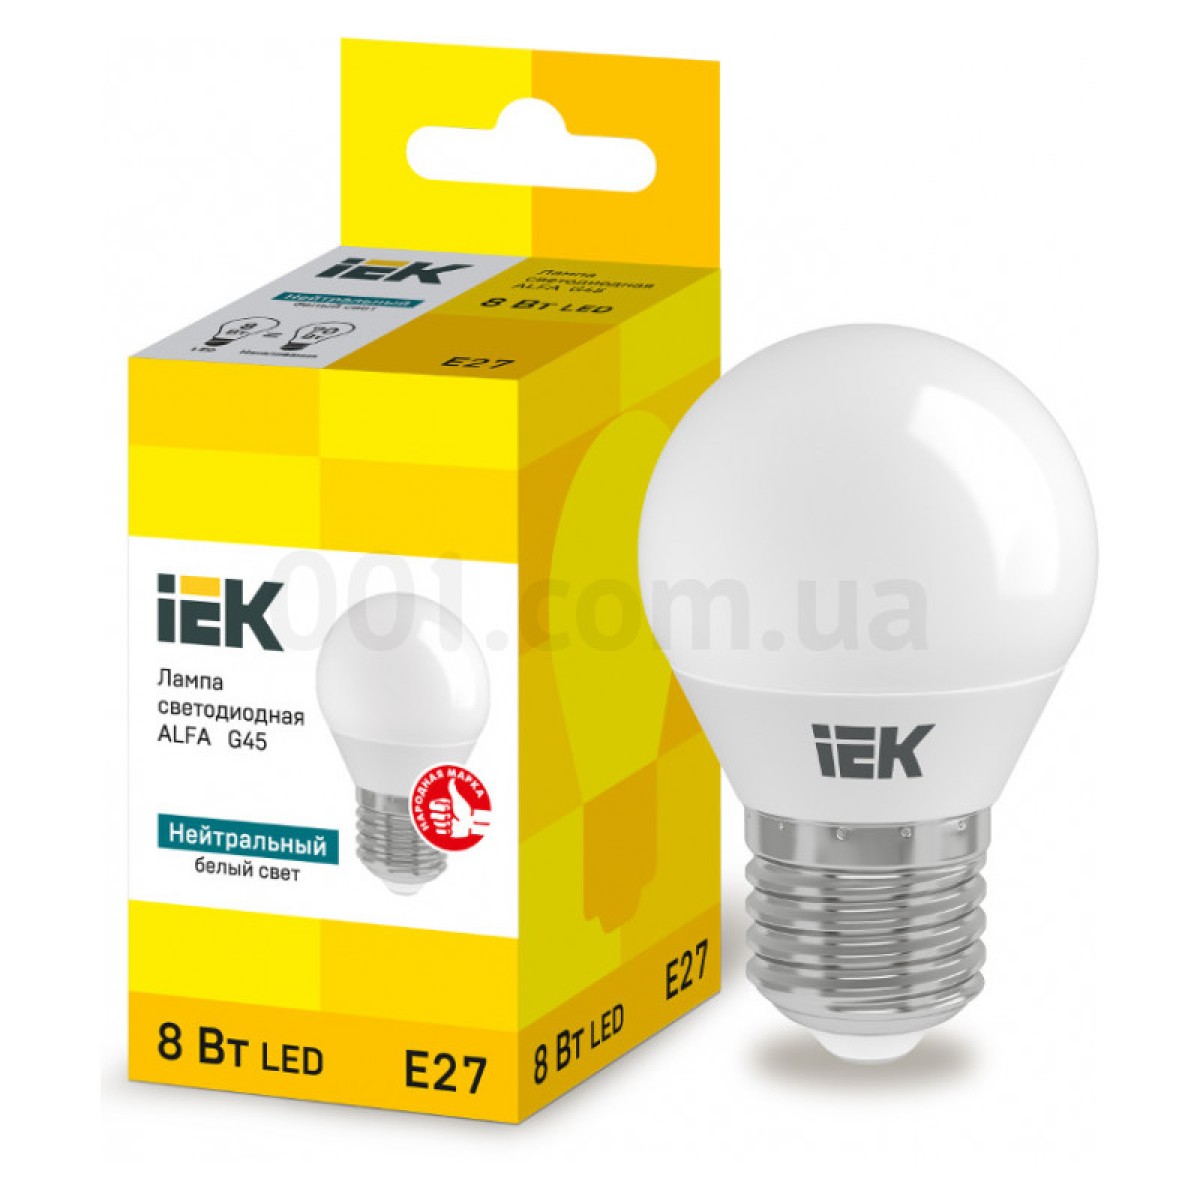 Светодиодная лампа LED ALFA G45 (шар) 8 Вт 230В 4000К E27, IEK 256_256.jpg